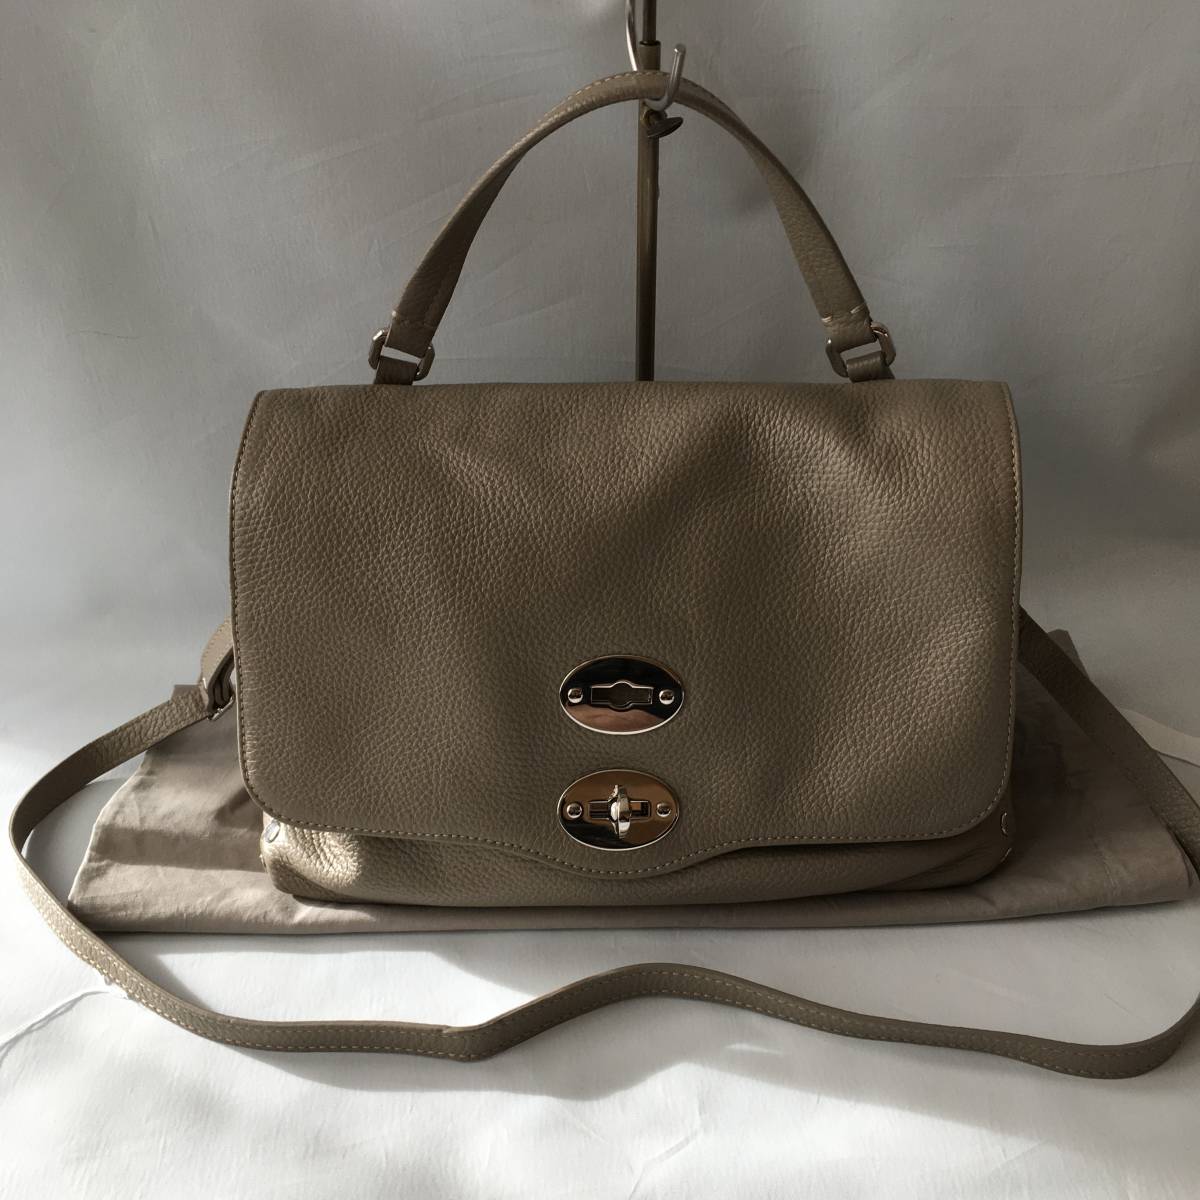  ultimate beautiful goods ZANELLATO ( The nela-to) pohs tea naPOSTINA shoulder bag 